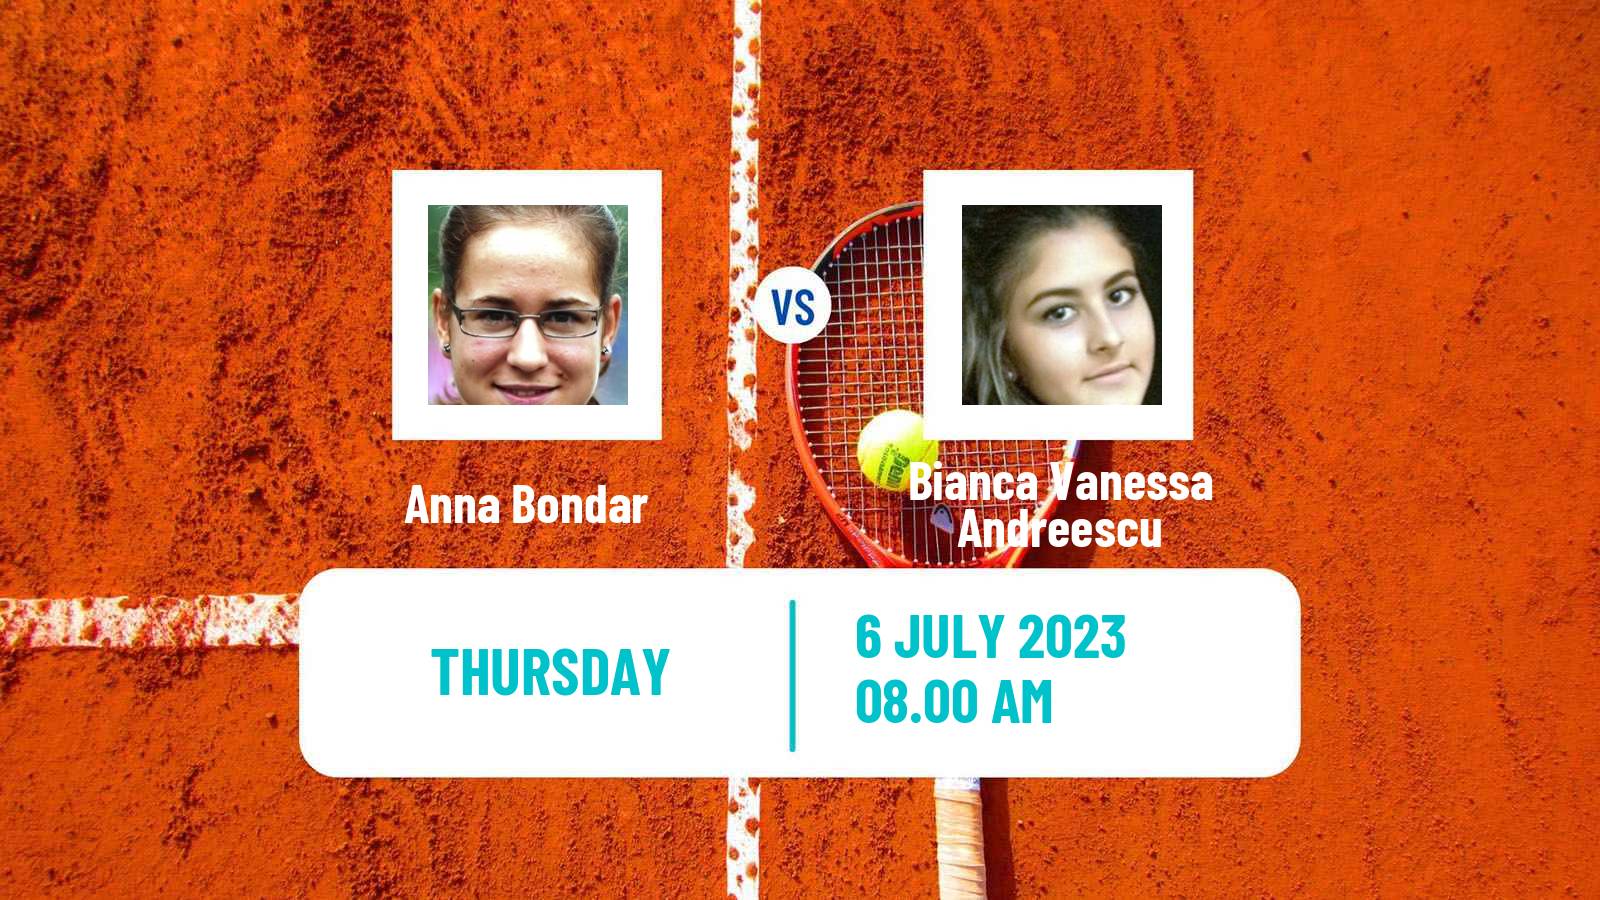 Tennis WTA Wimbledon Anna Bondar - Bianca Vanessa Andreescu